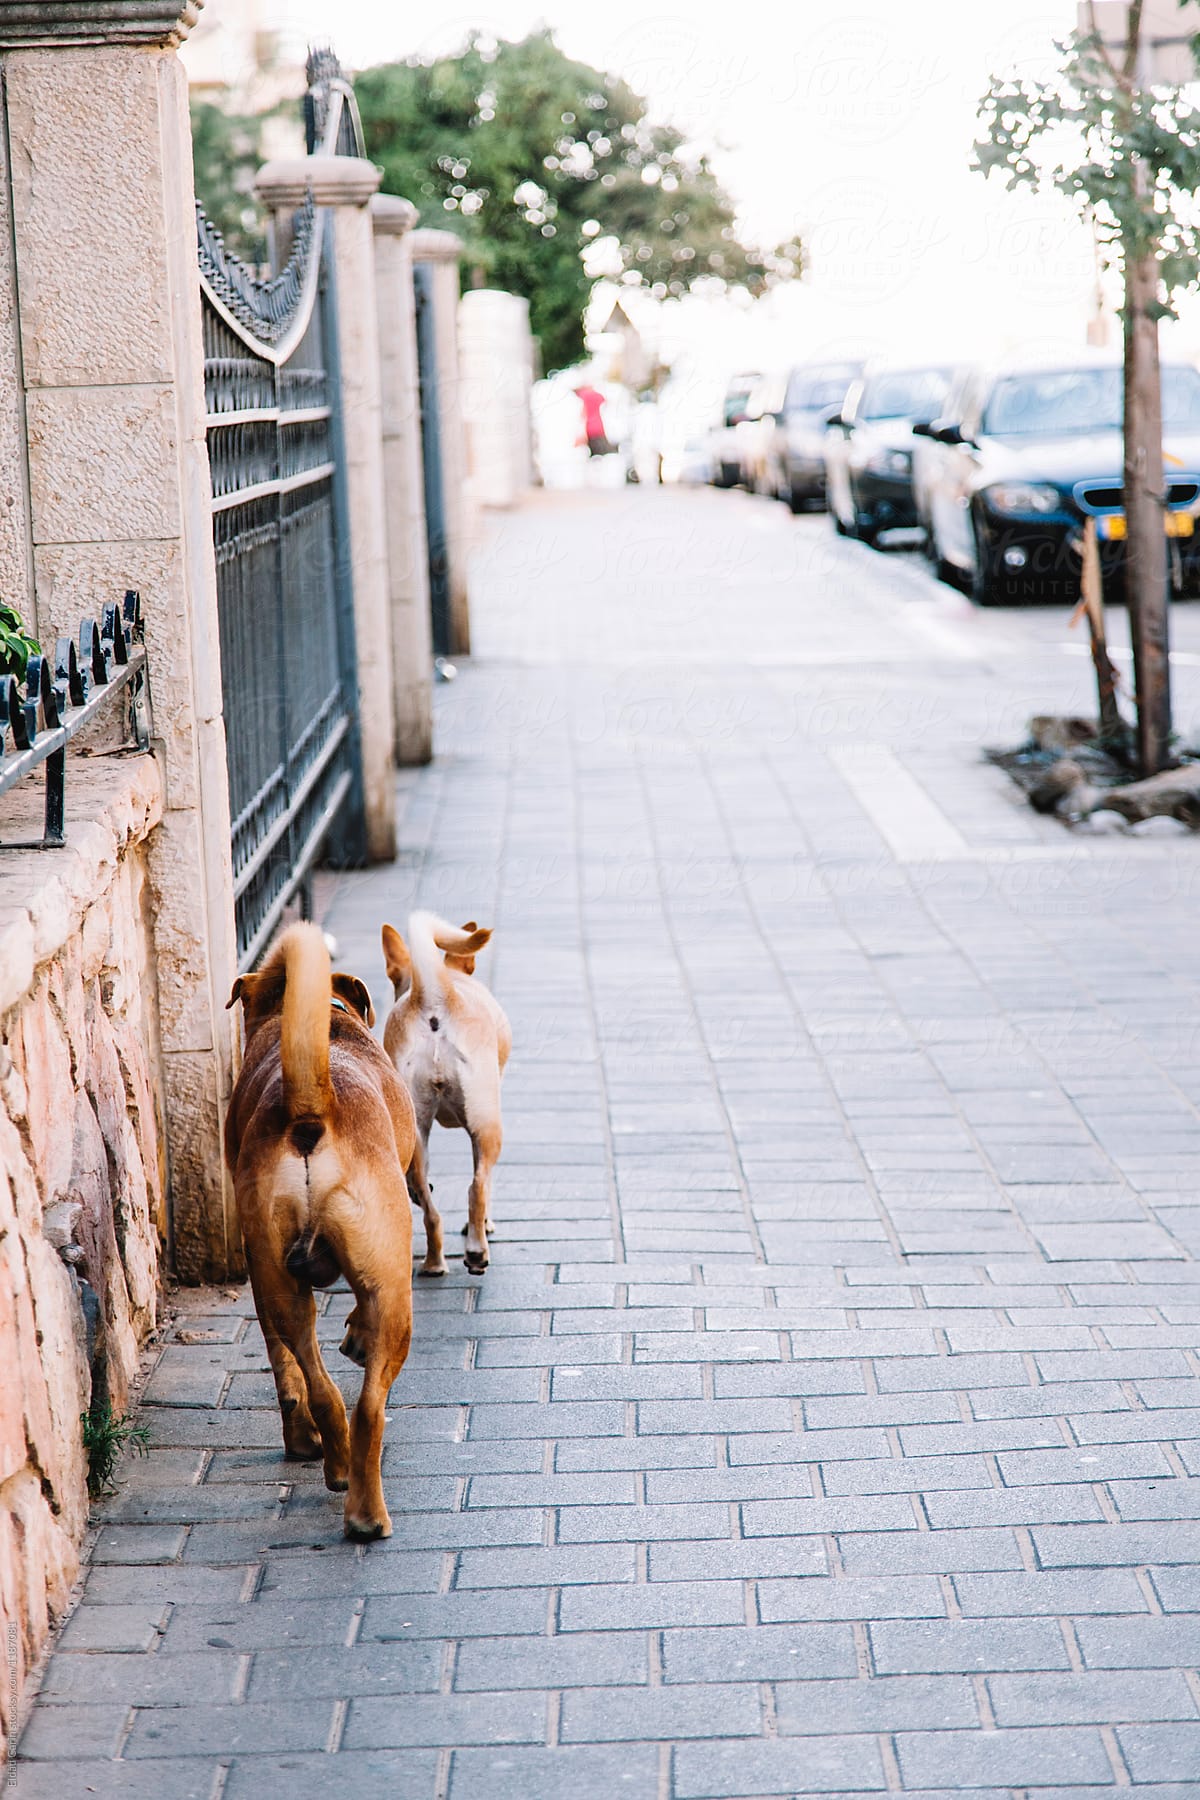 Dogs Walking on Pavement